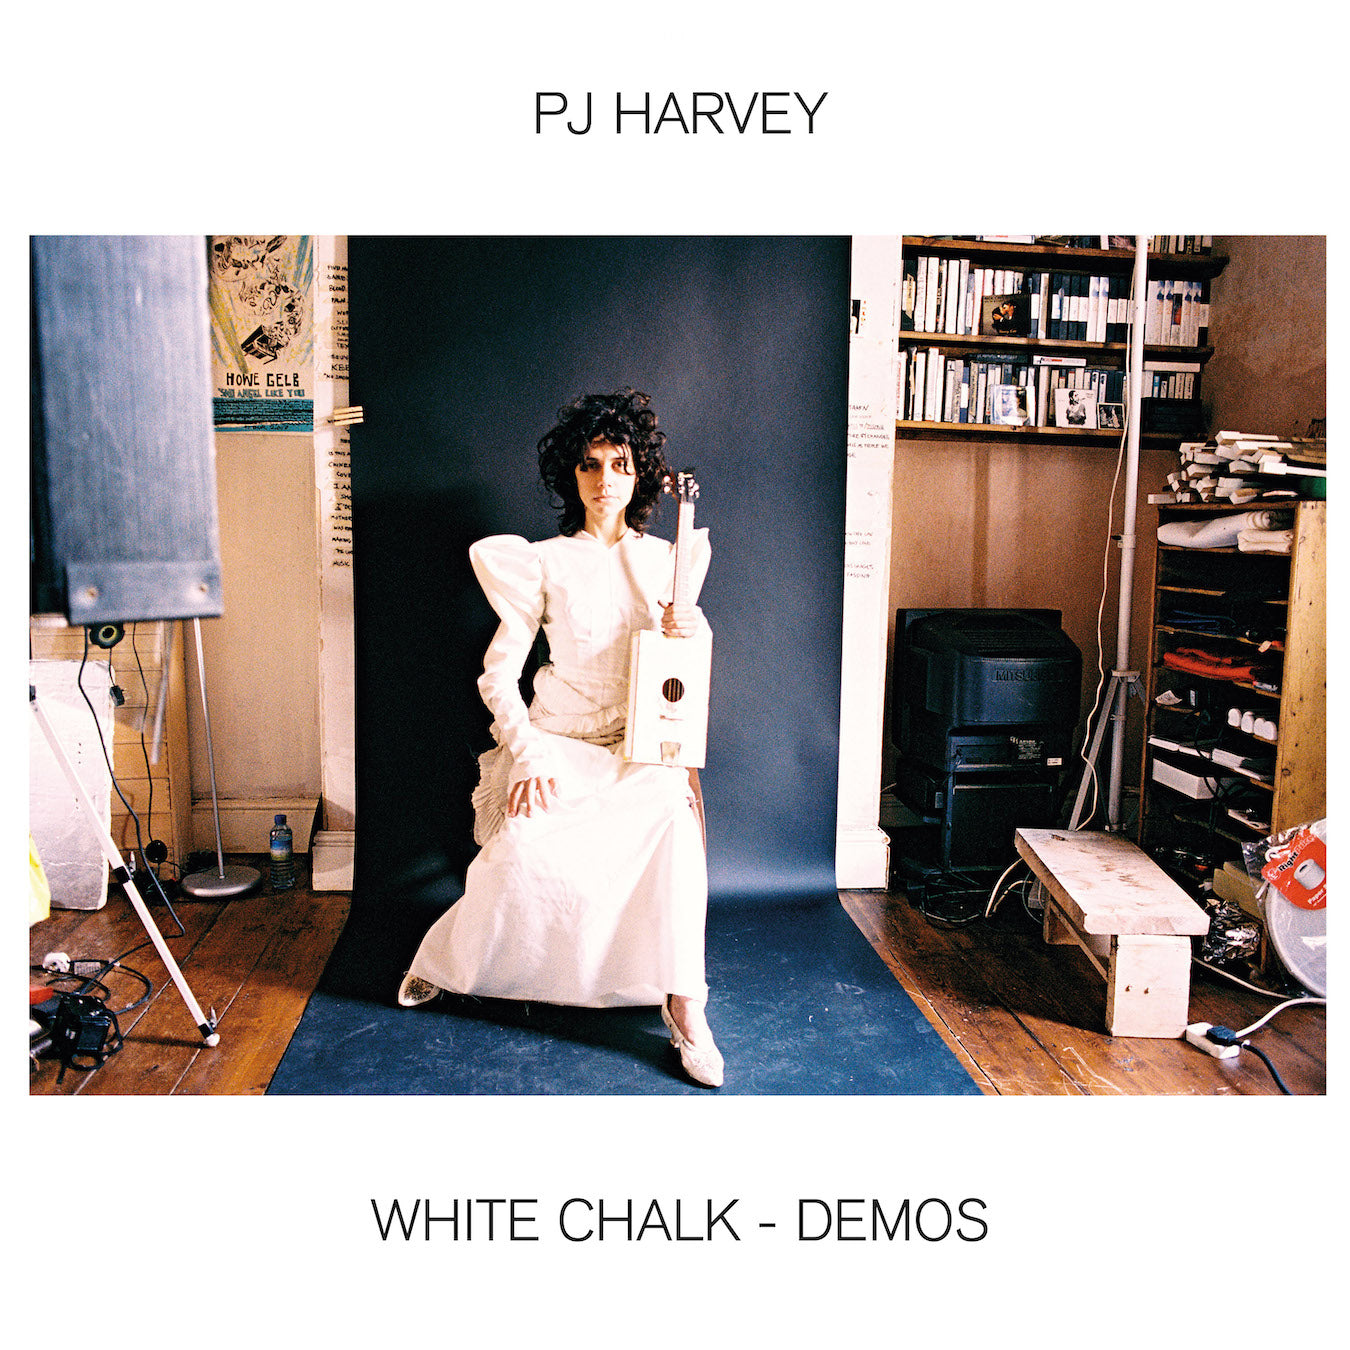 PJ HARVEY - White Chalk : Demos - LP - 180g Vinyl